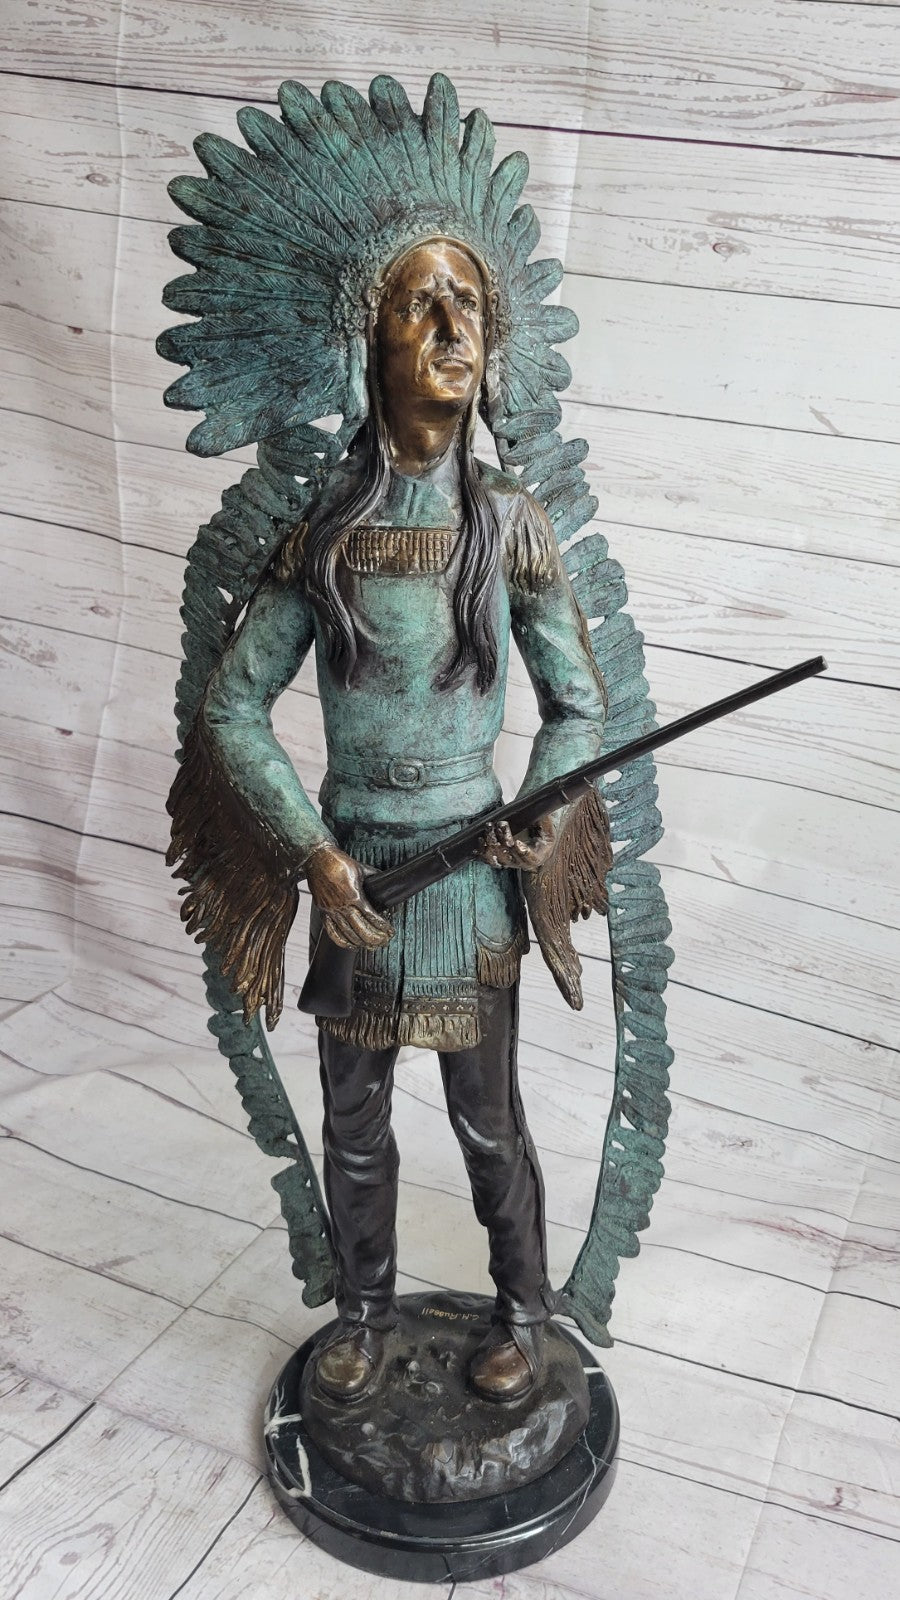 Handmade Native American Indian Warrior Bronze Sculpture Statue Figurine Art